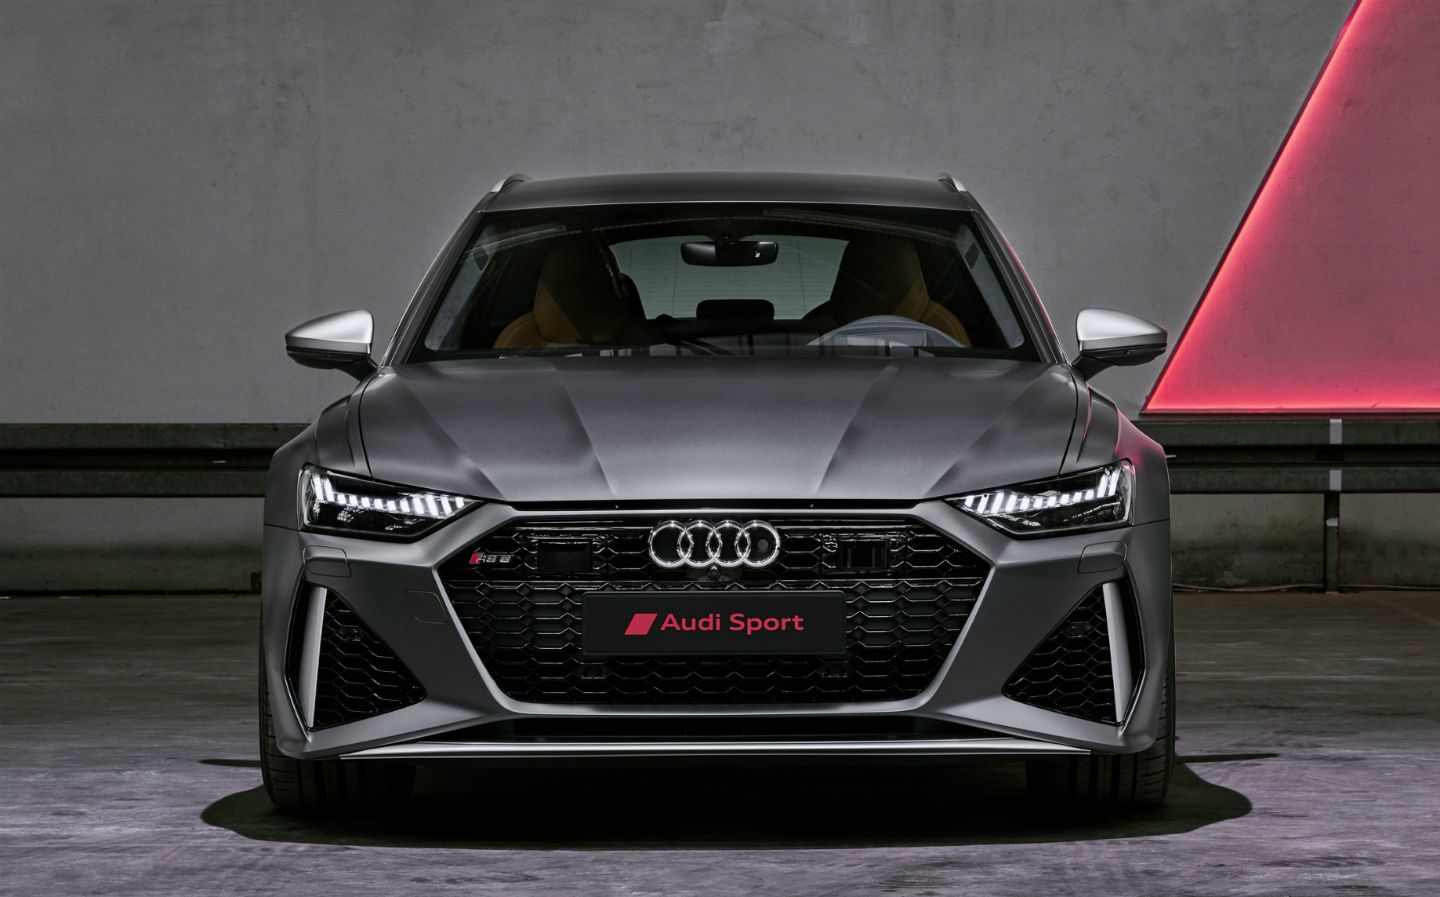 Best Audi Car Models On The Market 